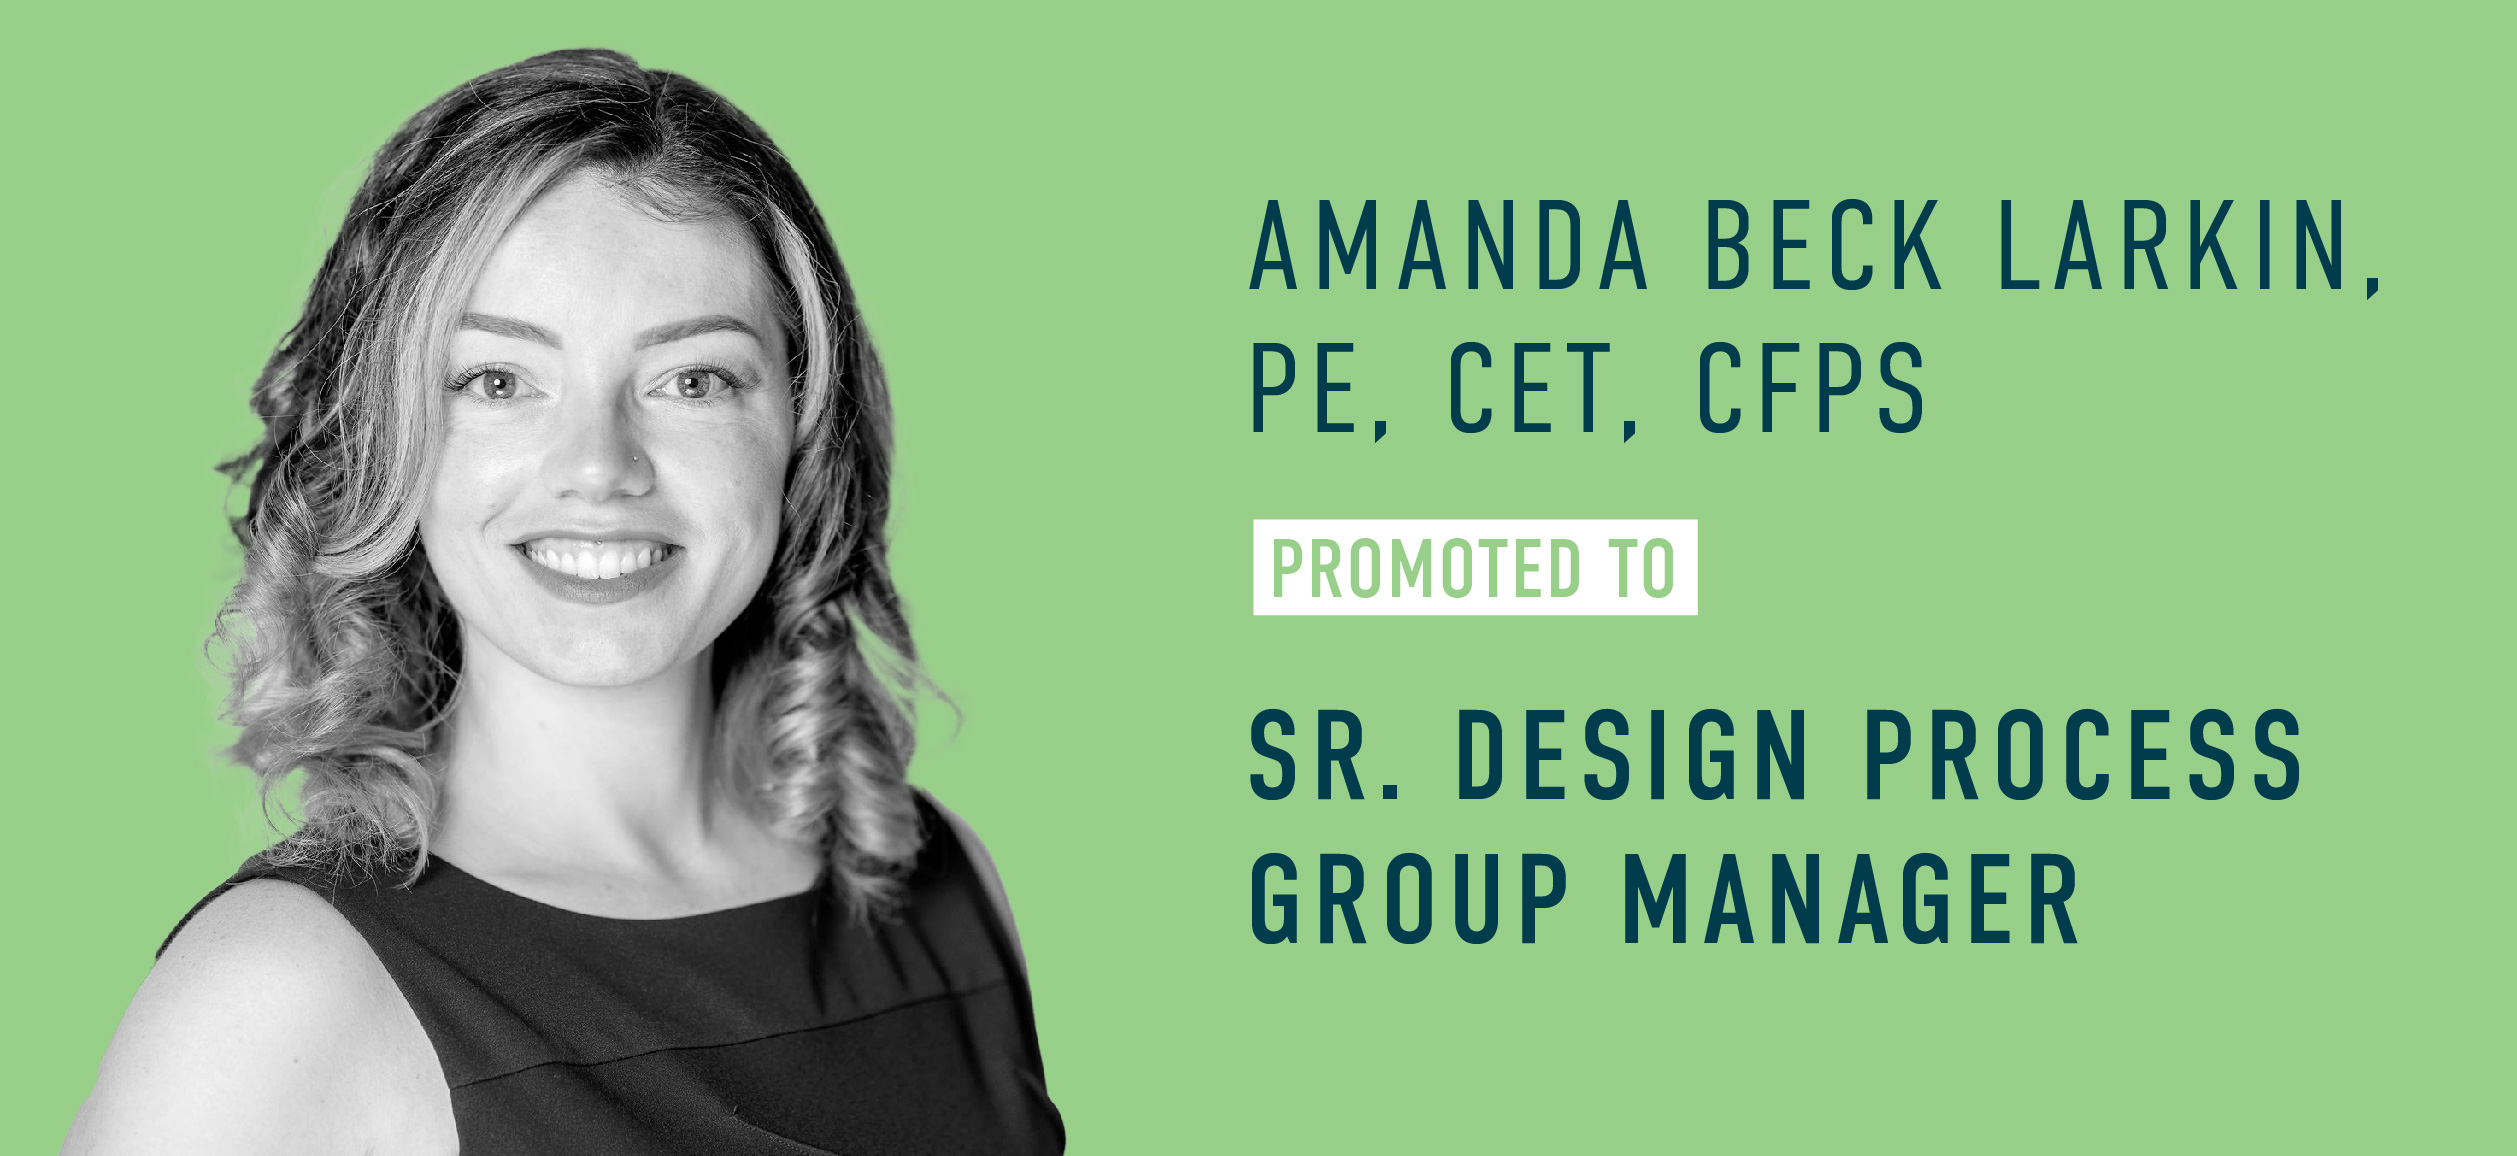 Amanda Beck Larkin, PE, CET, CFPS promoted to Senior Design Process Group Manager